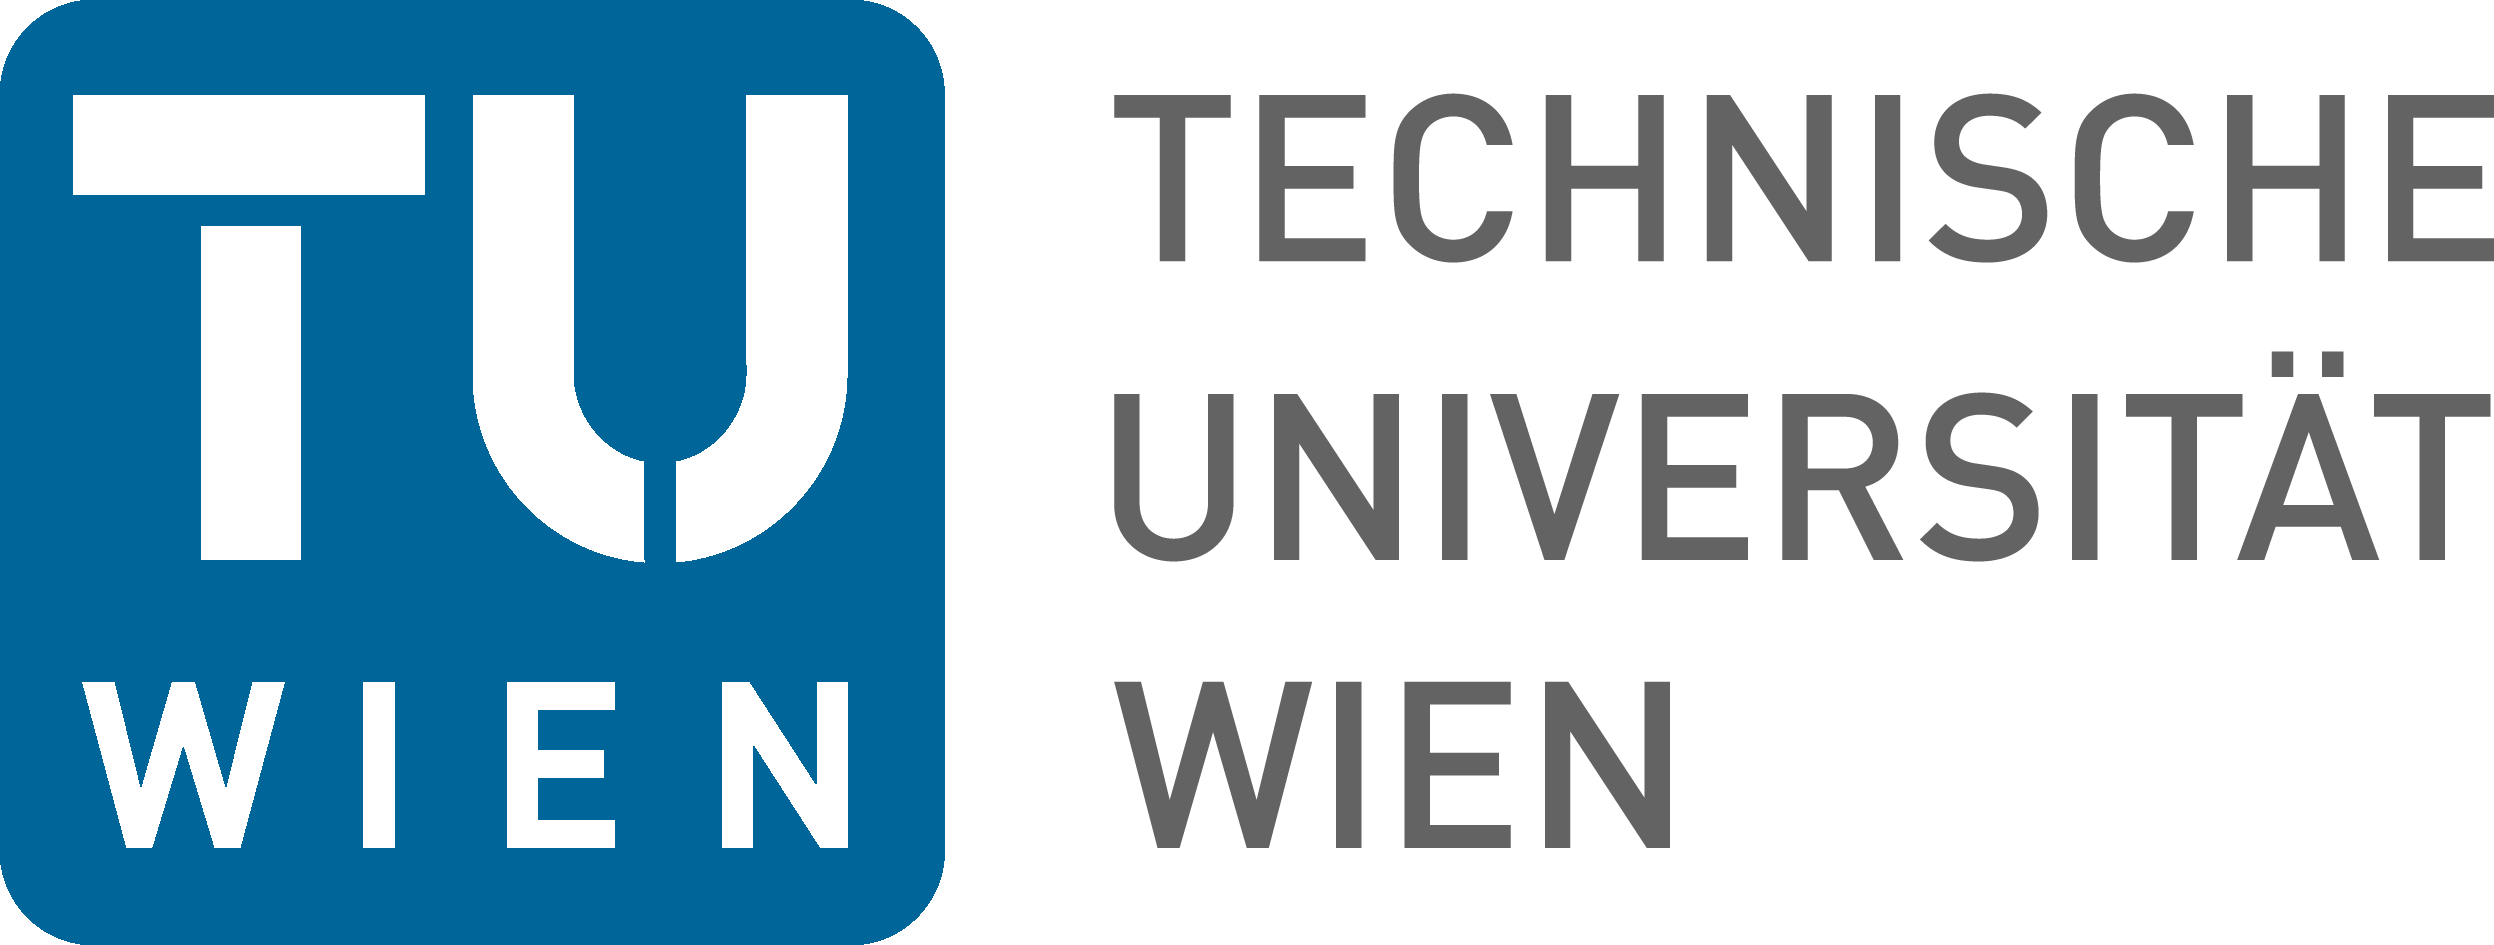 {mlang de}Technische Universität Wien{mlang}{mlang other}TU Wien{mlang}